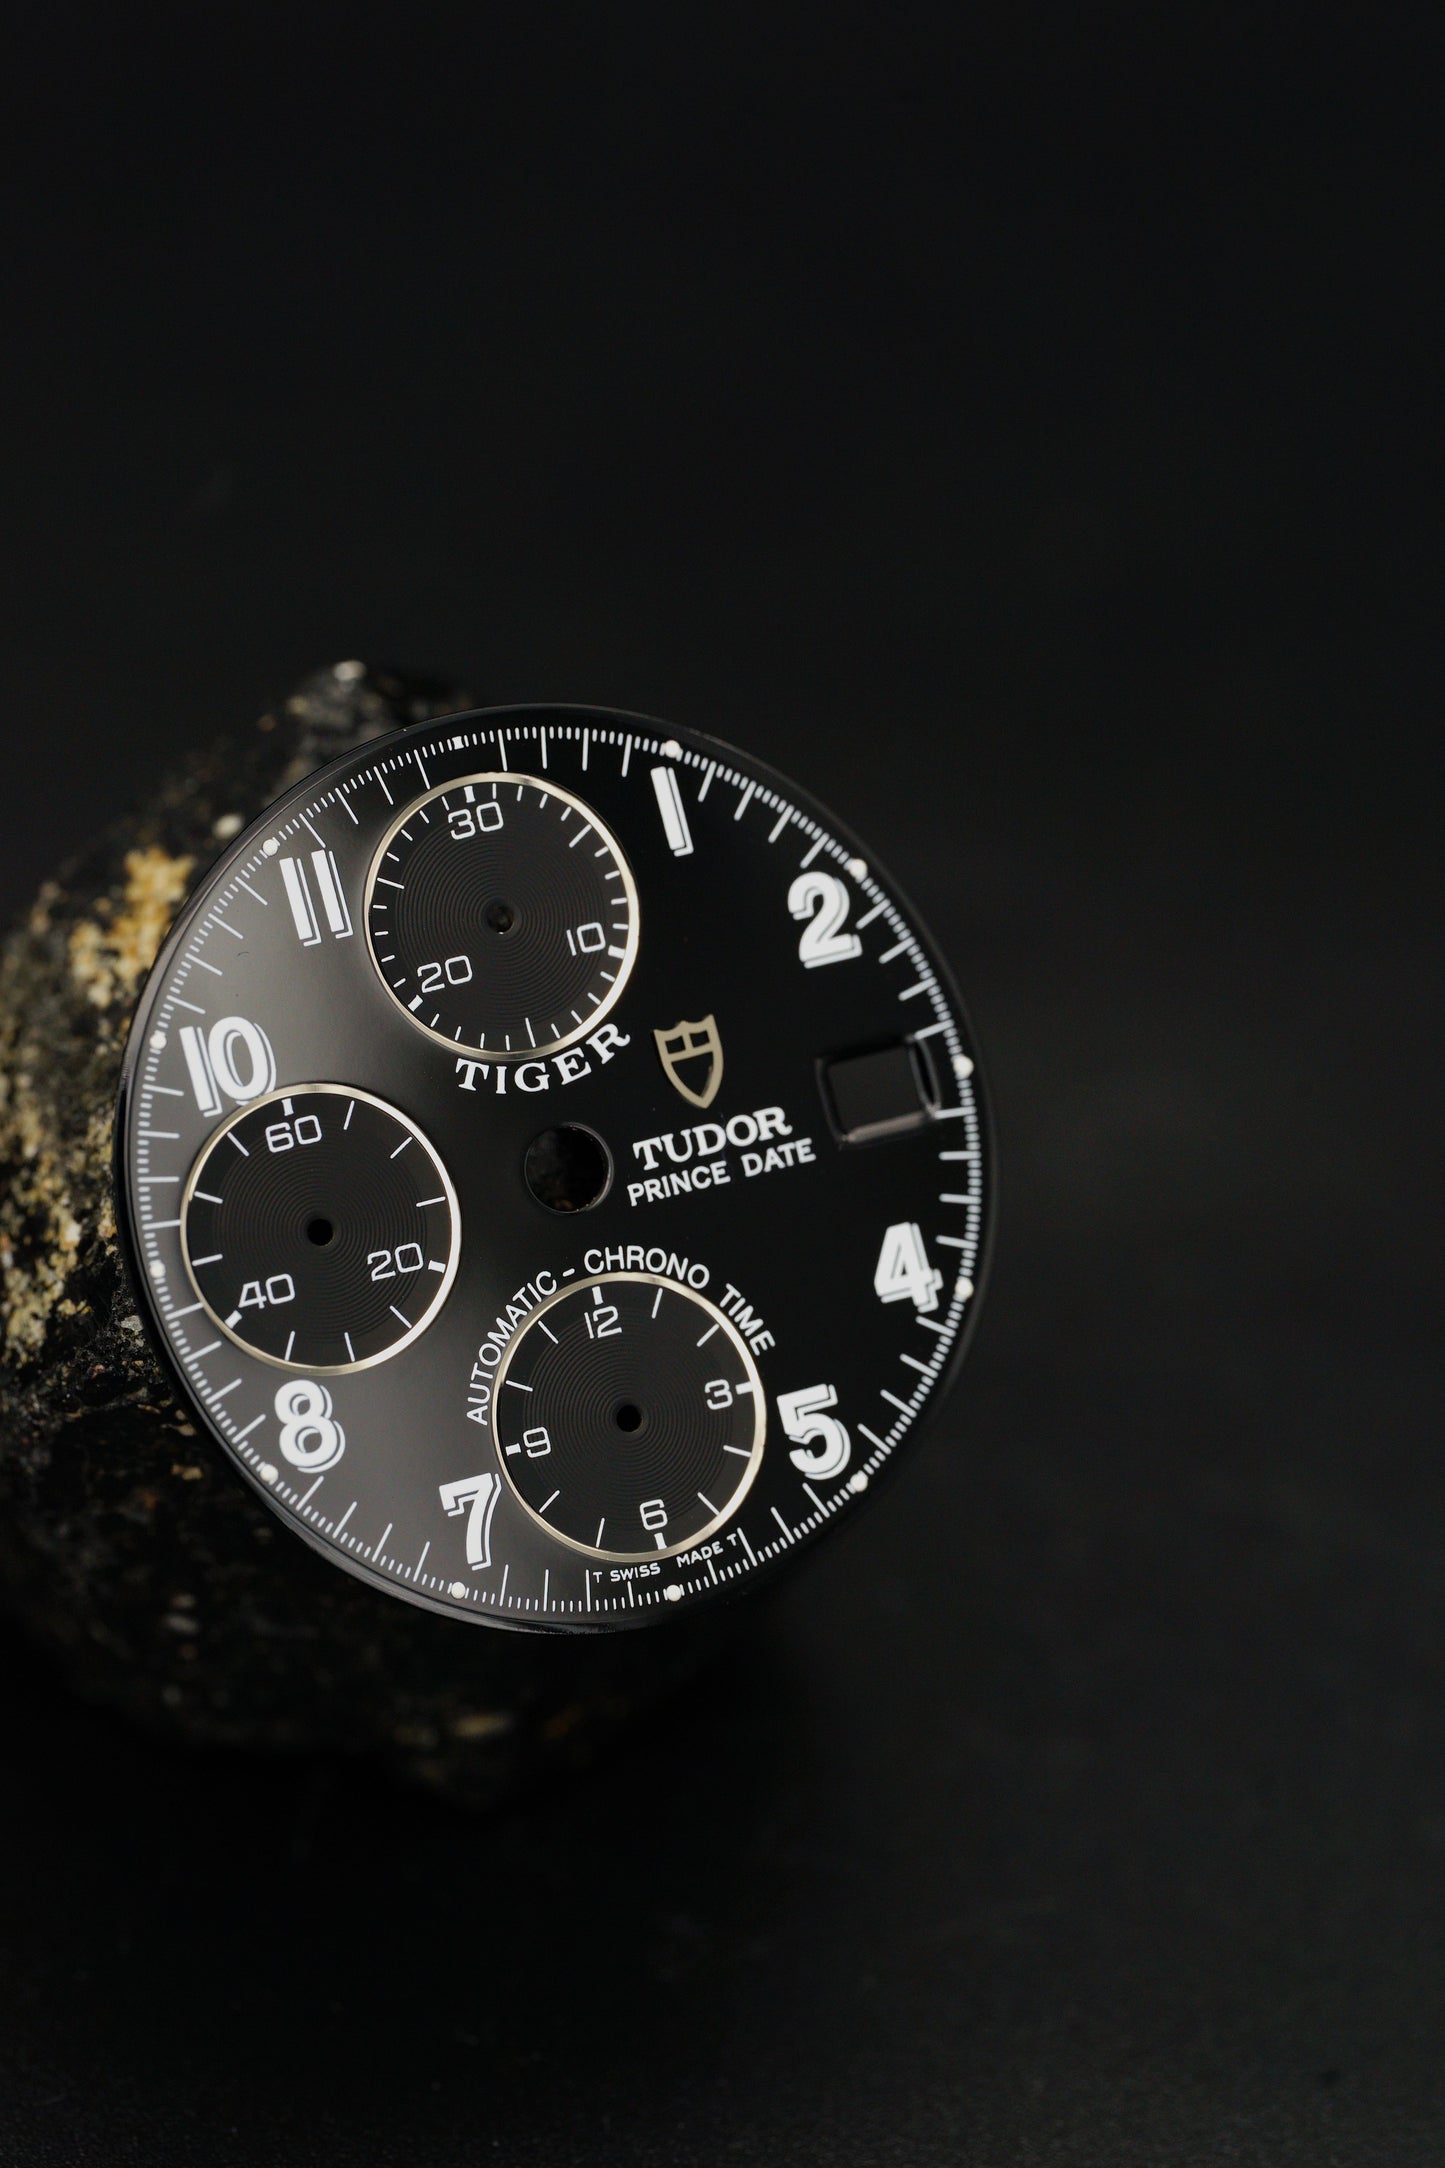 Tudor Black Dial for Prince Date 79280 Tritium